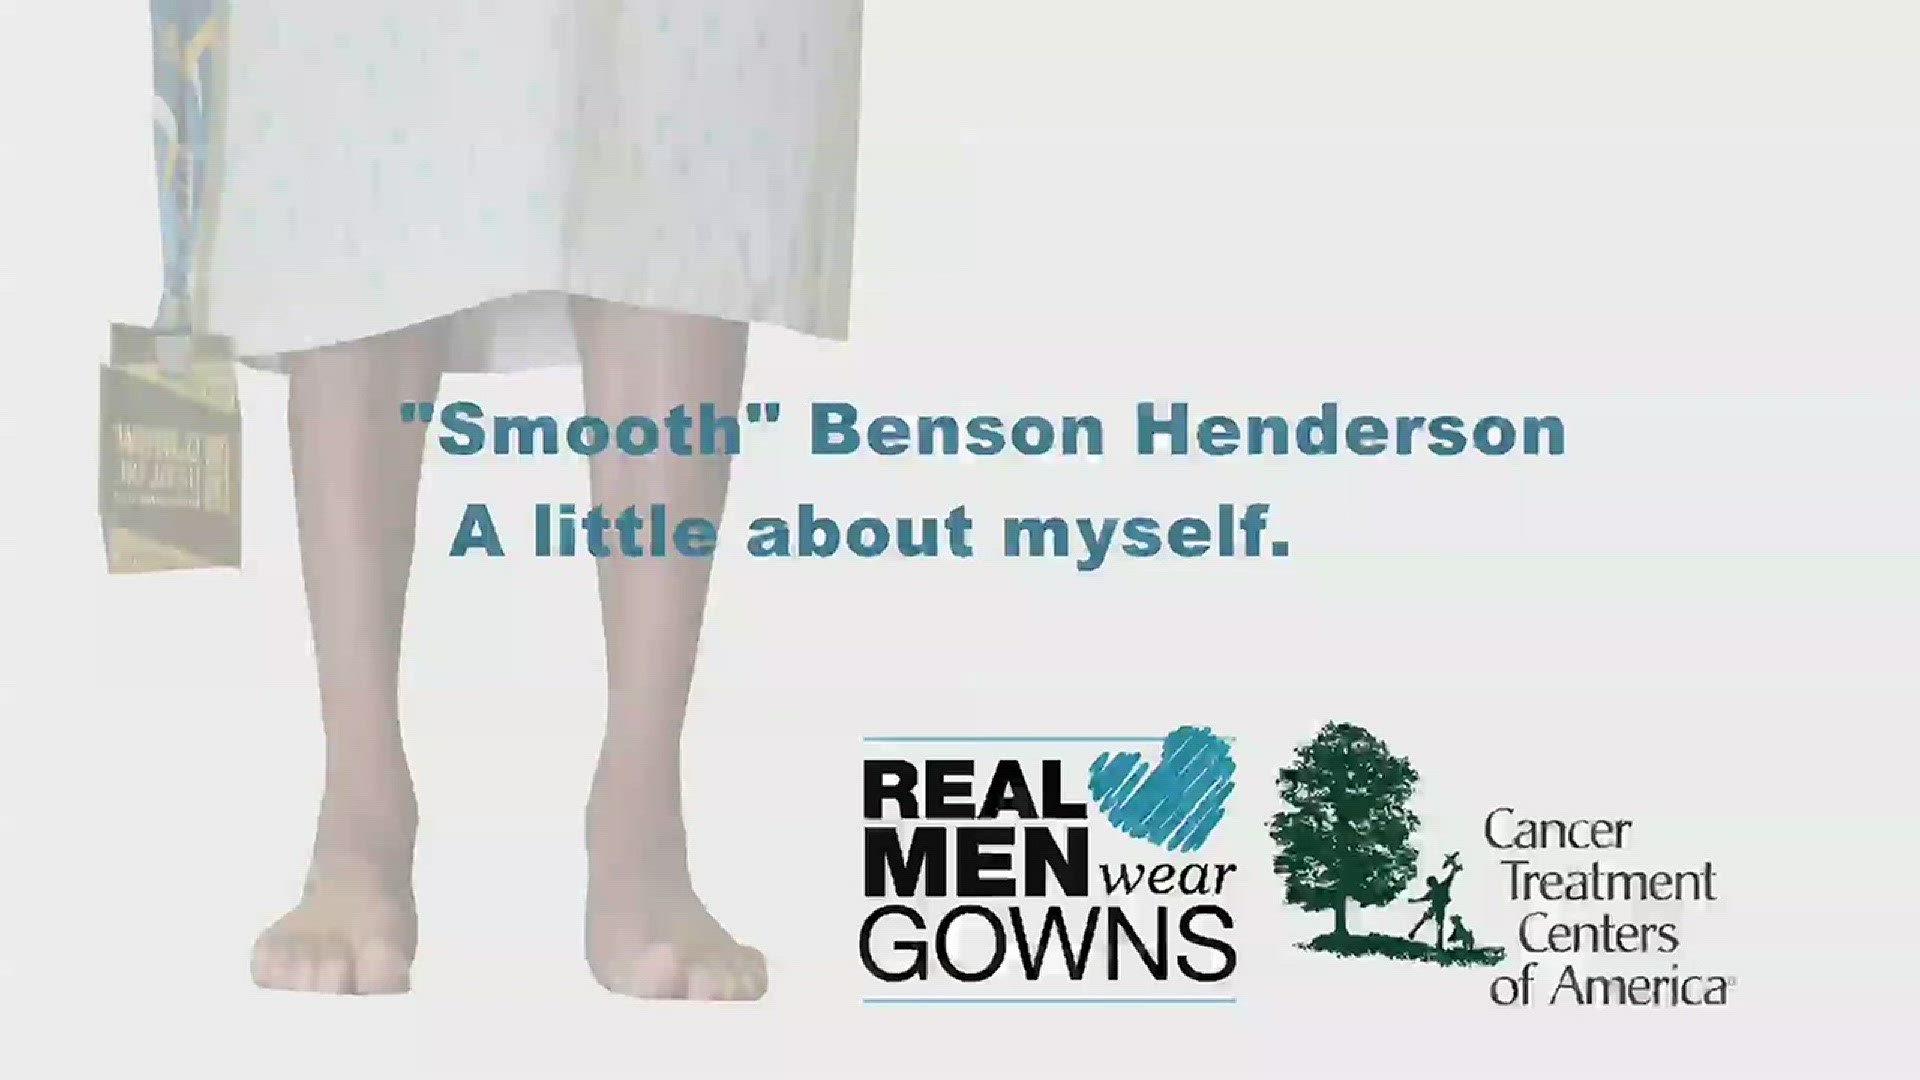 Mixed Martial Artist "Smooth" Benson Henderson interview.